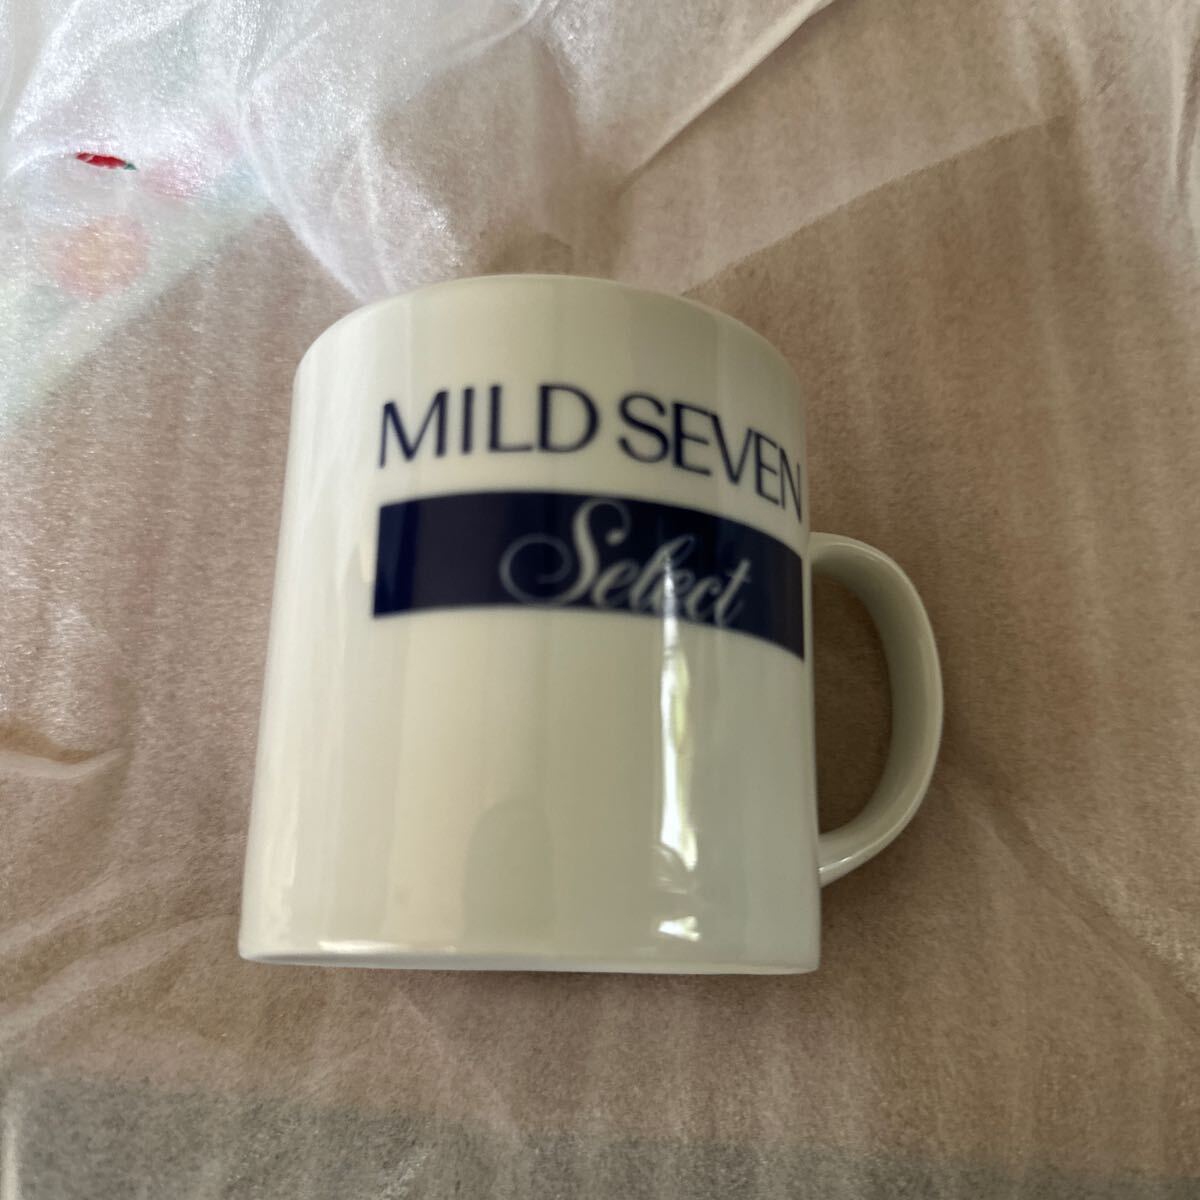  not for sale mild seven mug 